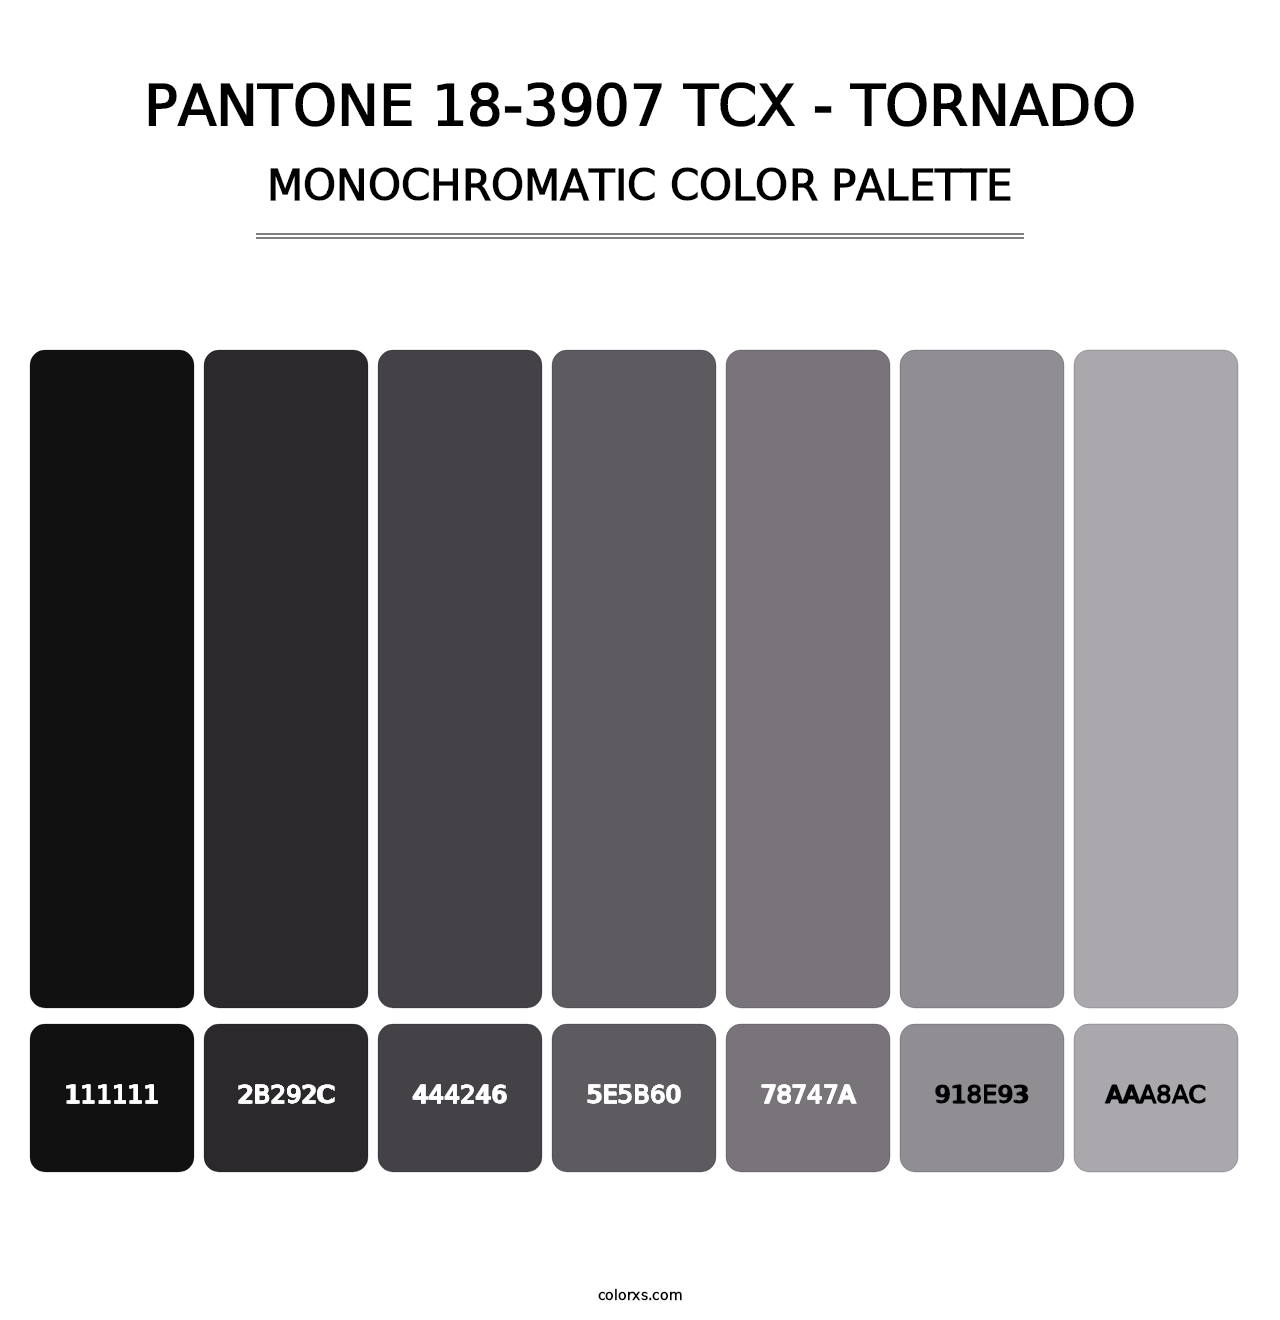 PANTONE 18-3907 TCX - Tornado - Monochromatic Color Palette